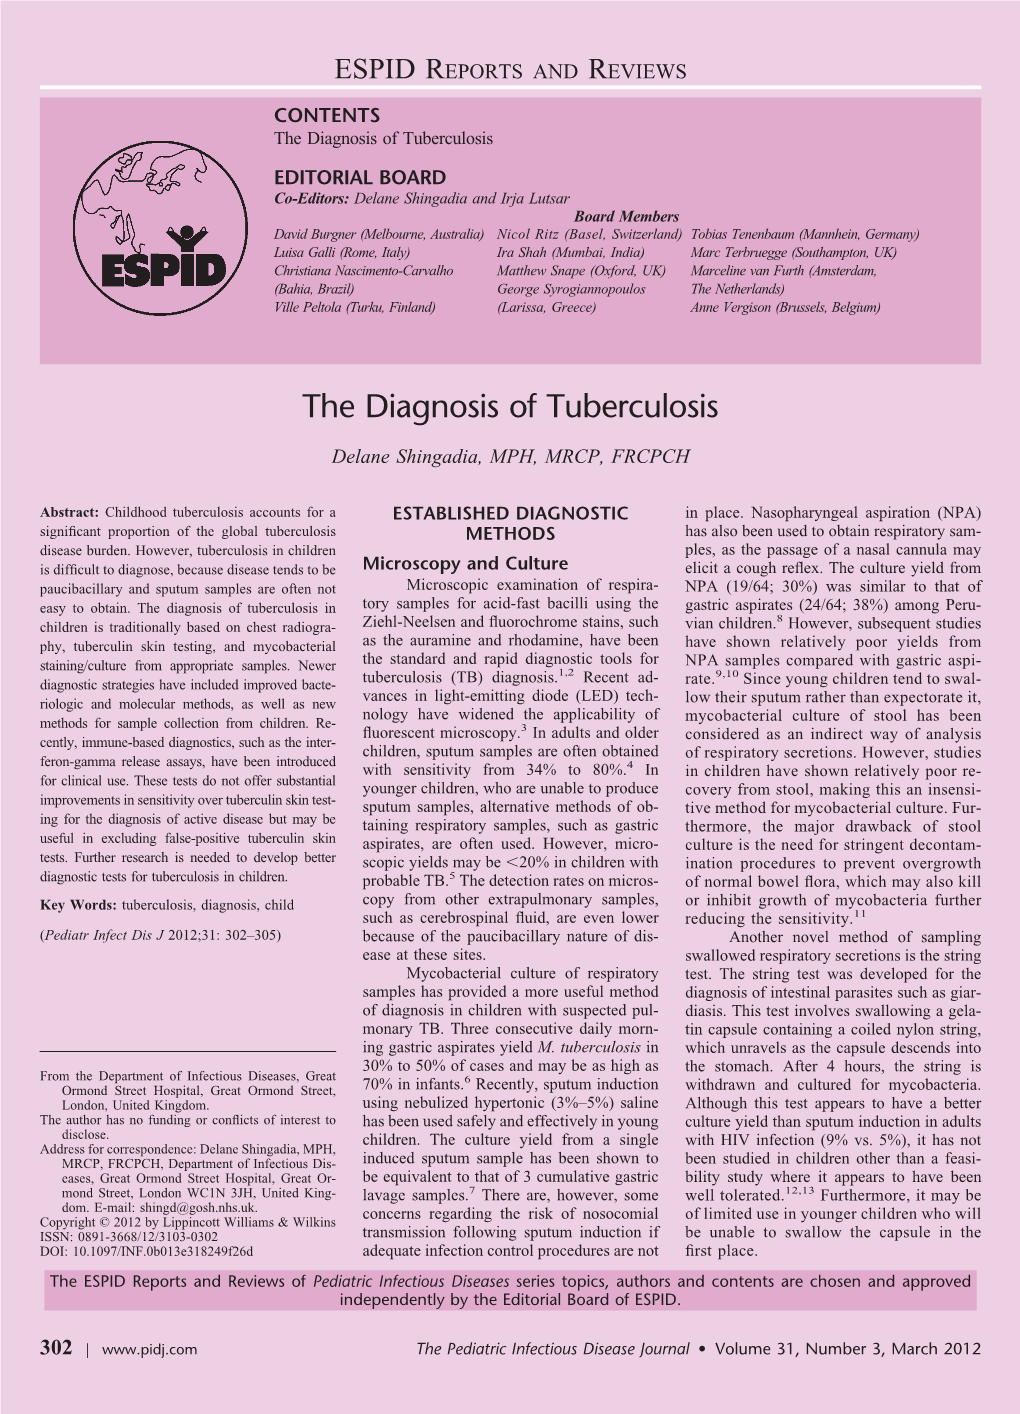 The Diagnosis of Tuberculosis